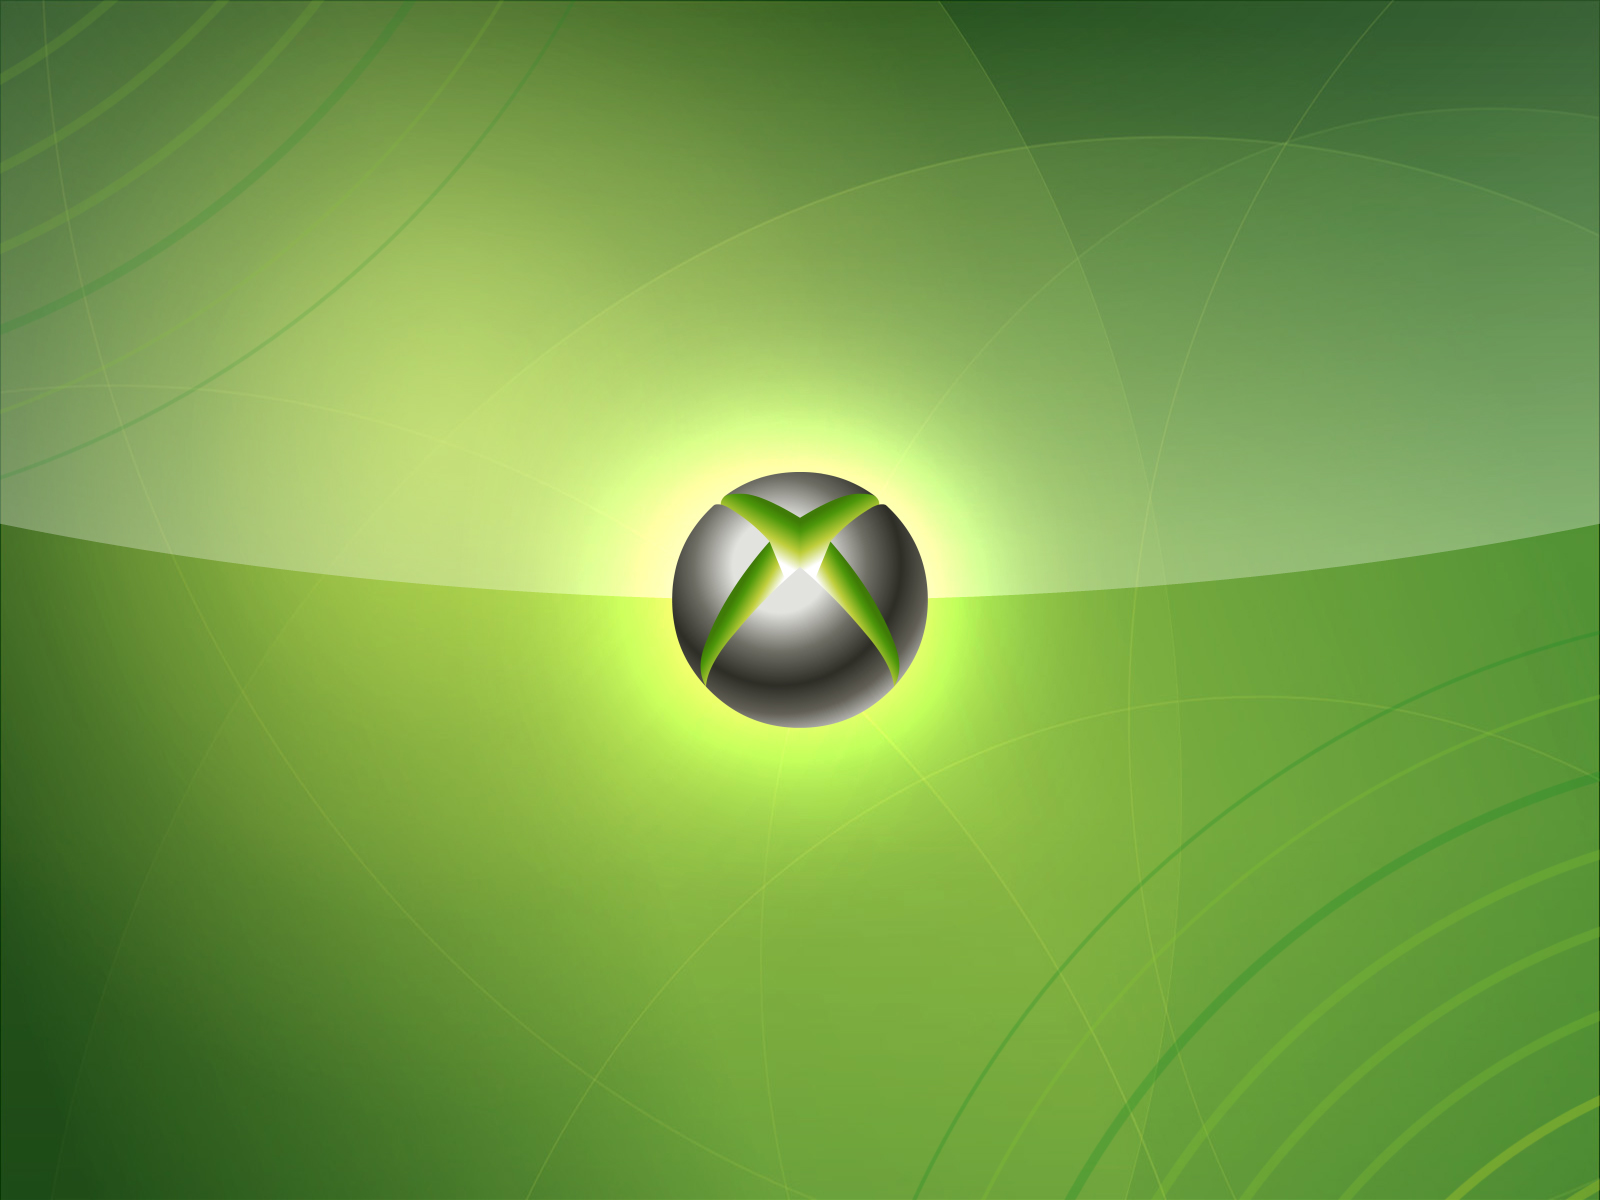 Xbox 360 Wallpaper: Free Xbox 360 Wallpapers